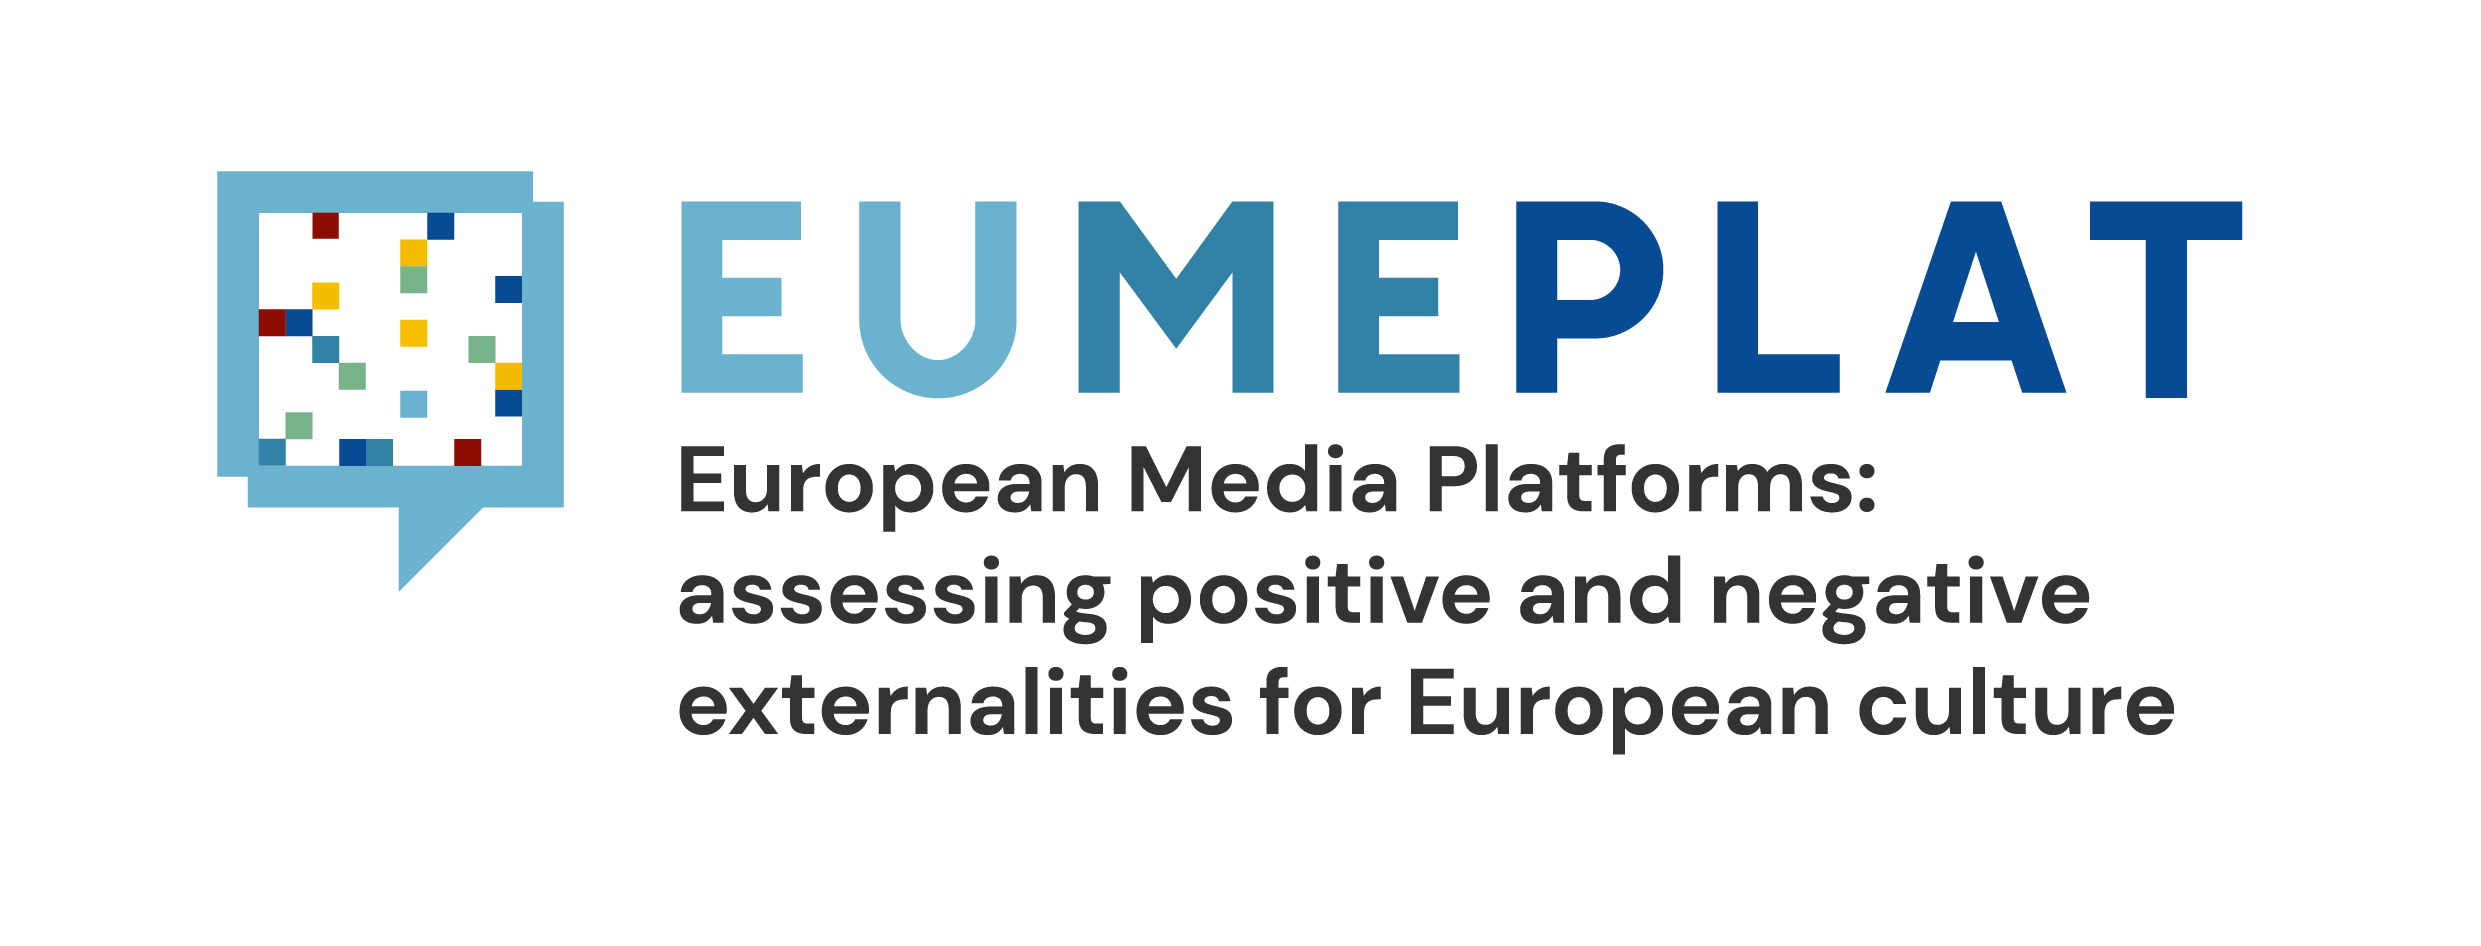 European Media Platforms: Assessing Positive and Negative Externalities for European Culture